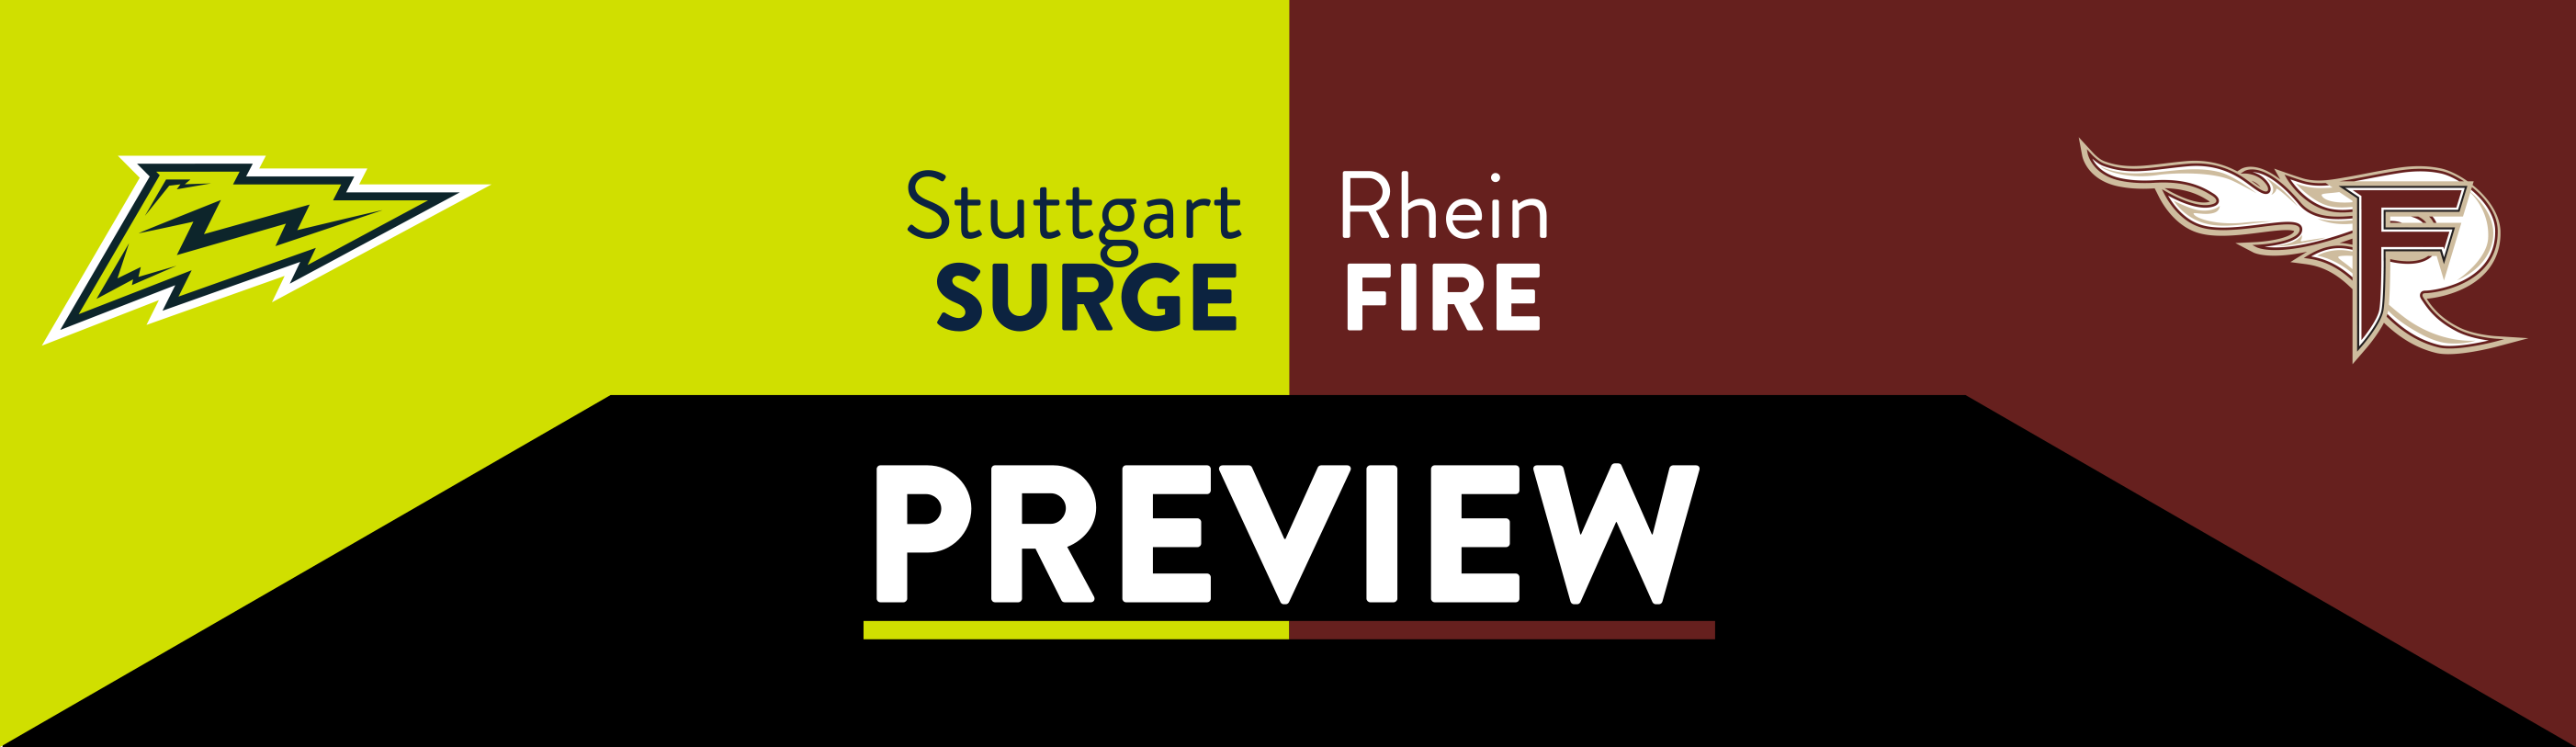 European League of Football Championship Game: Stuttgart Surge vs. Rhein Fire